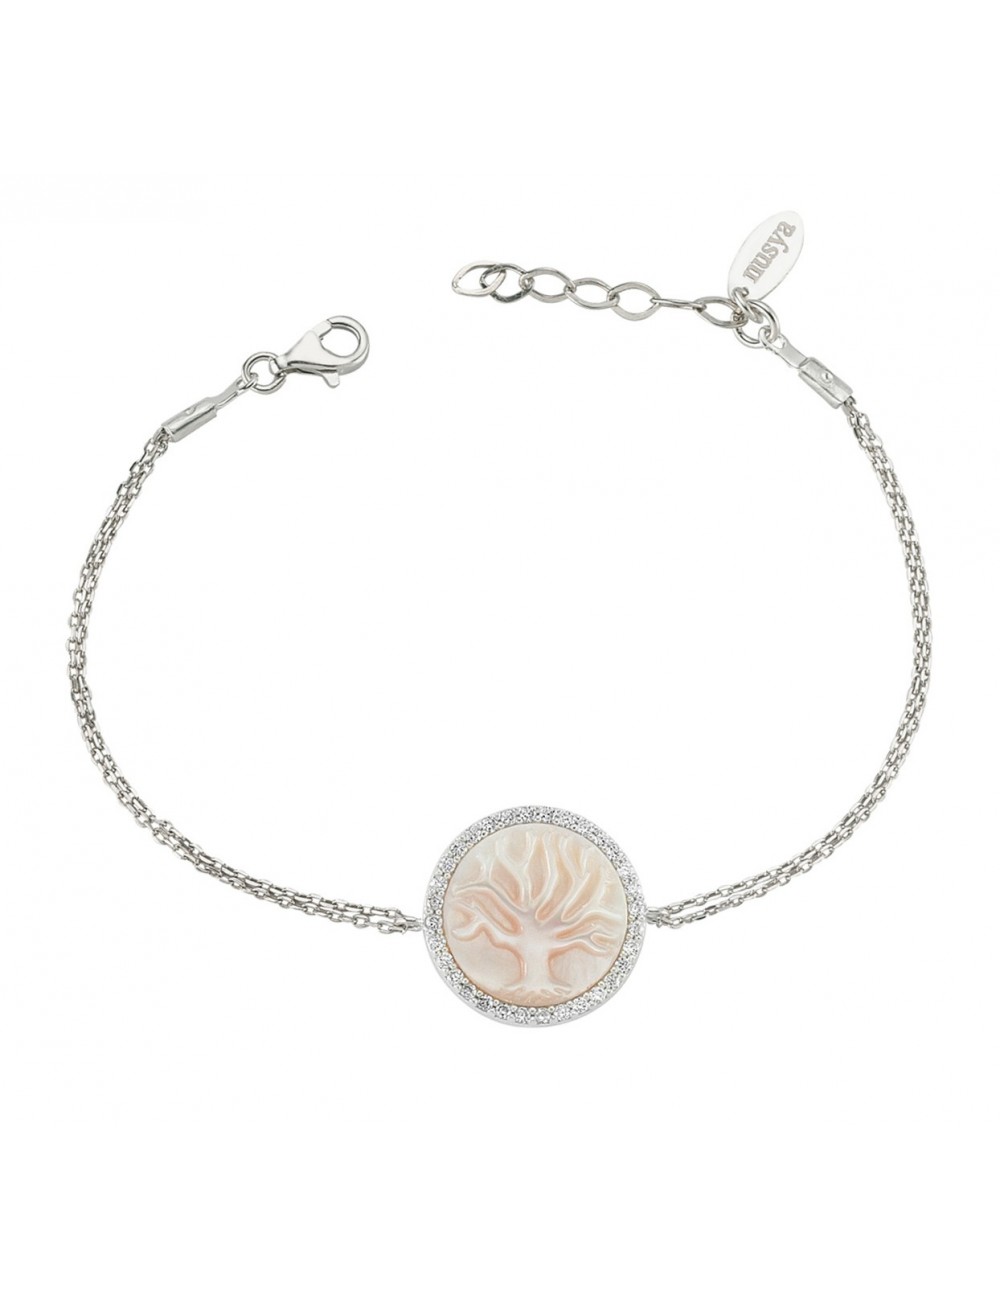 Tree of Life bracelet